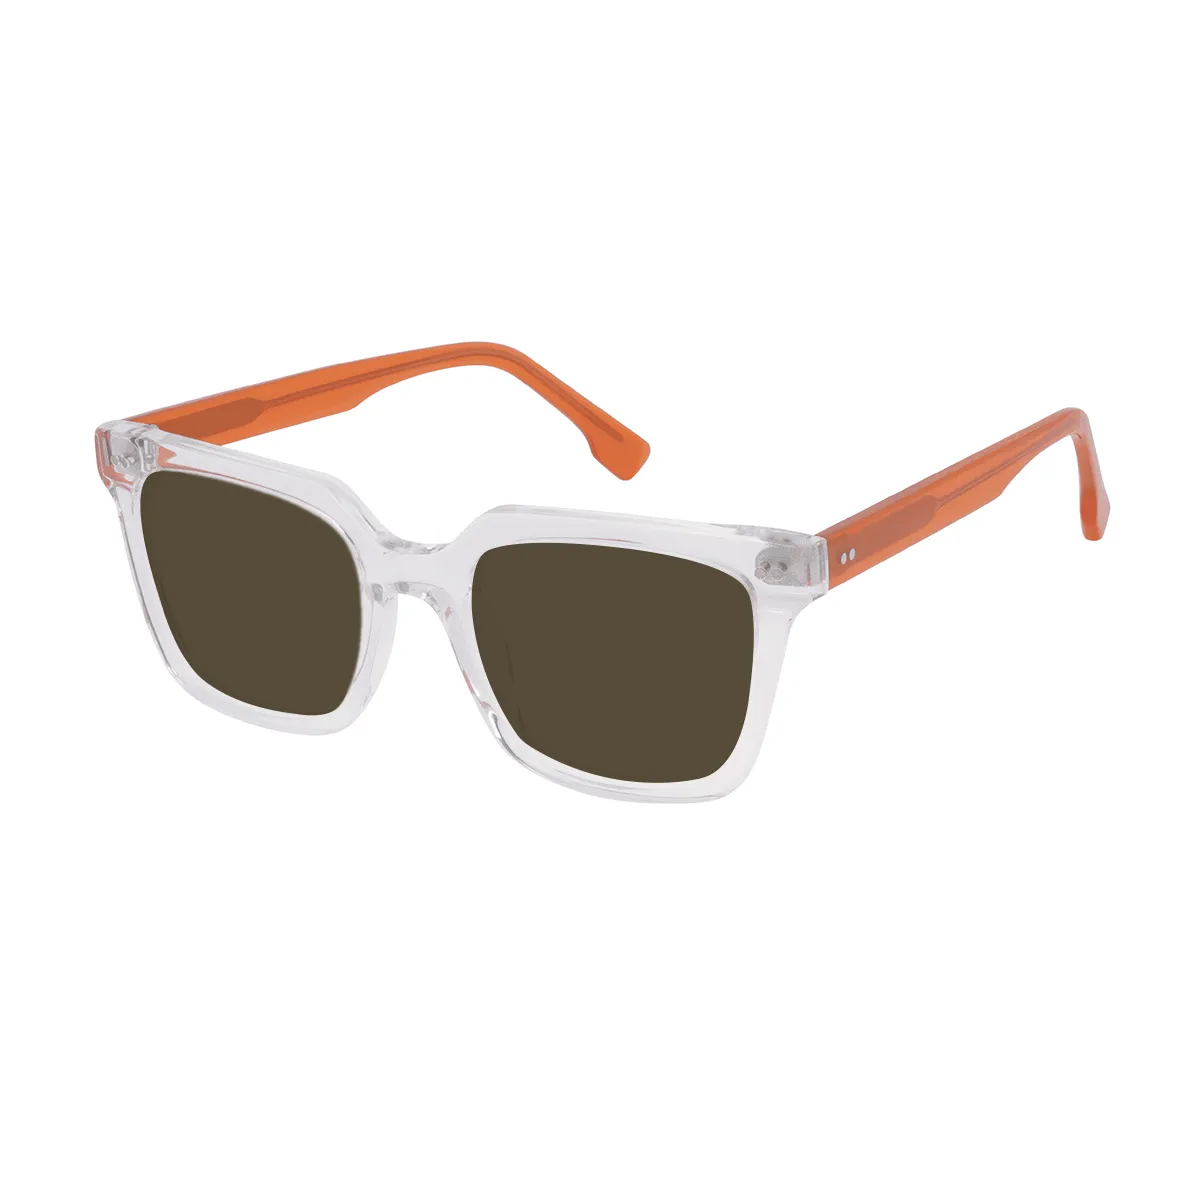 Greer - Square Transparent Sunglasses for Men & Women